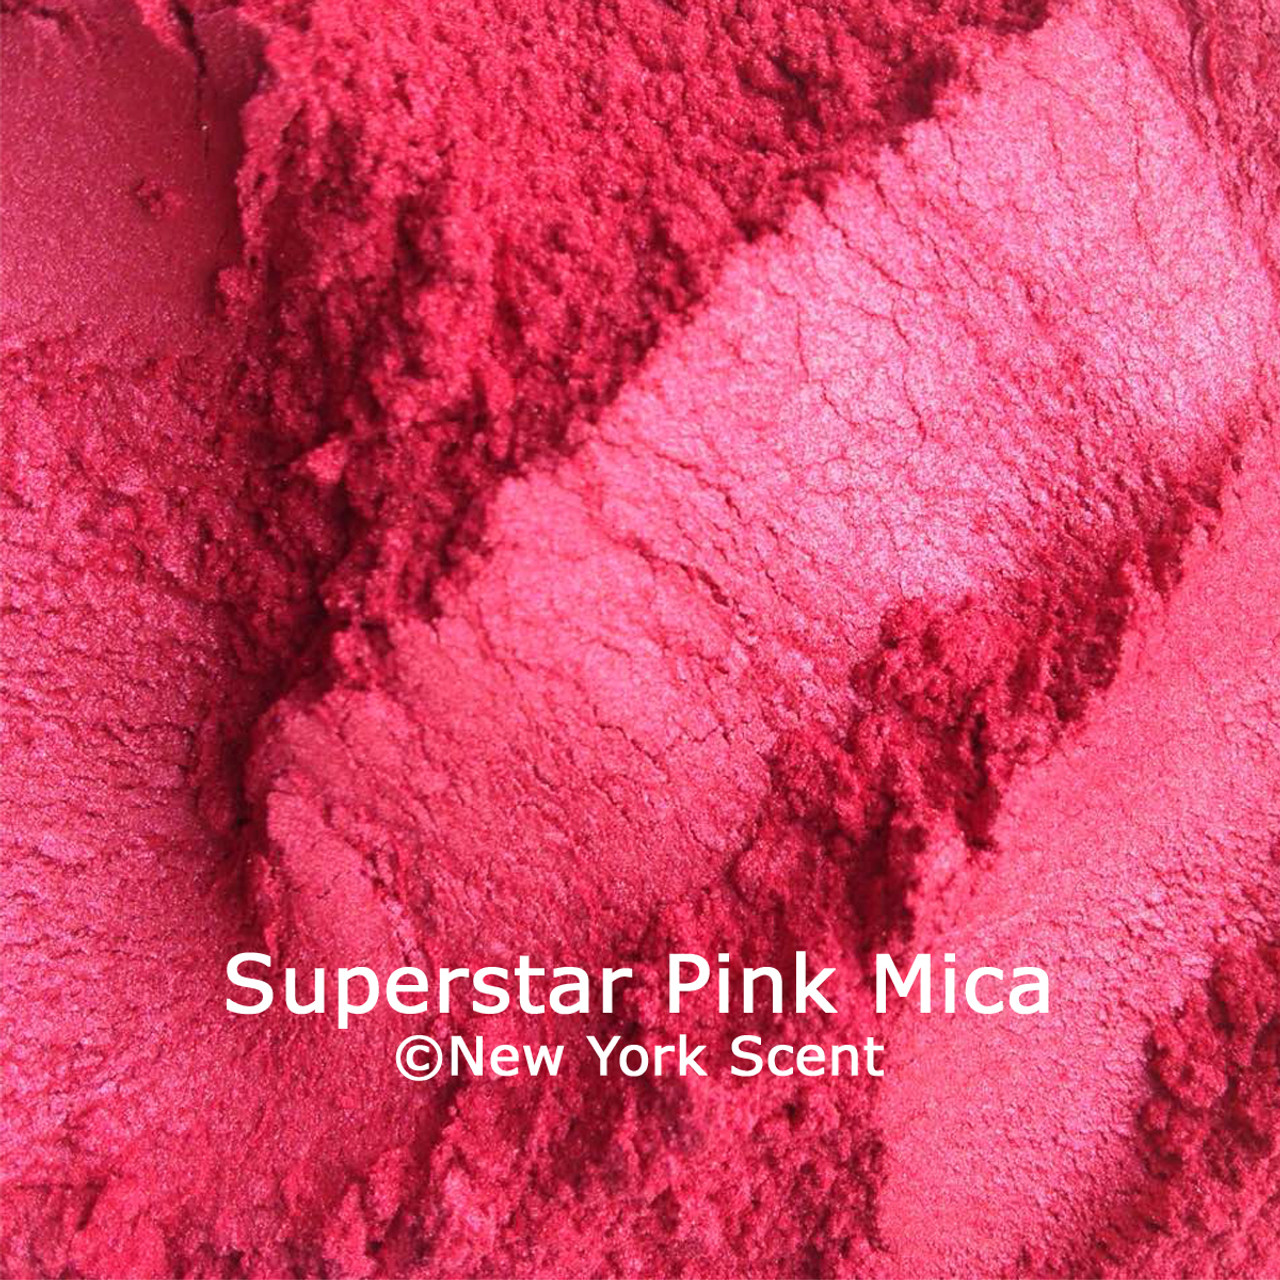 Superstar Pink Mica Soap Color - New York Scent